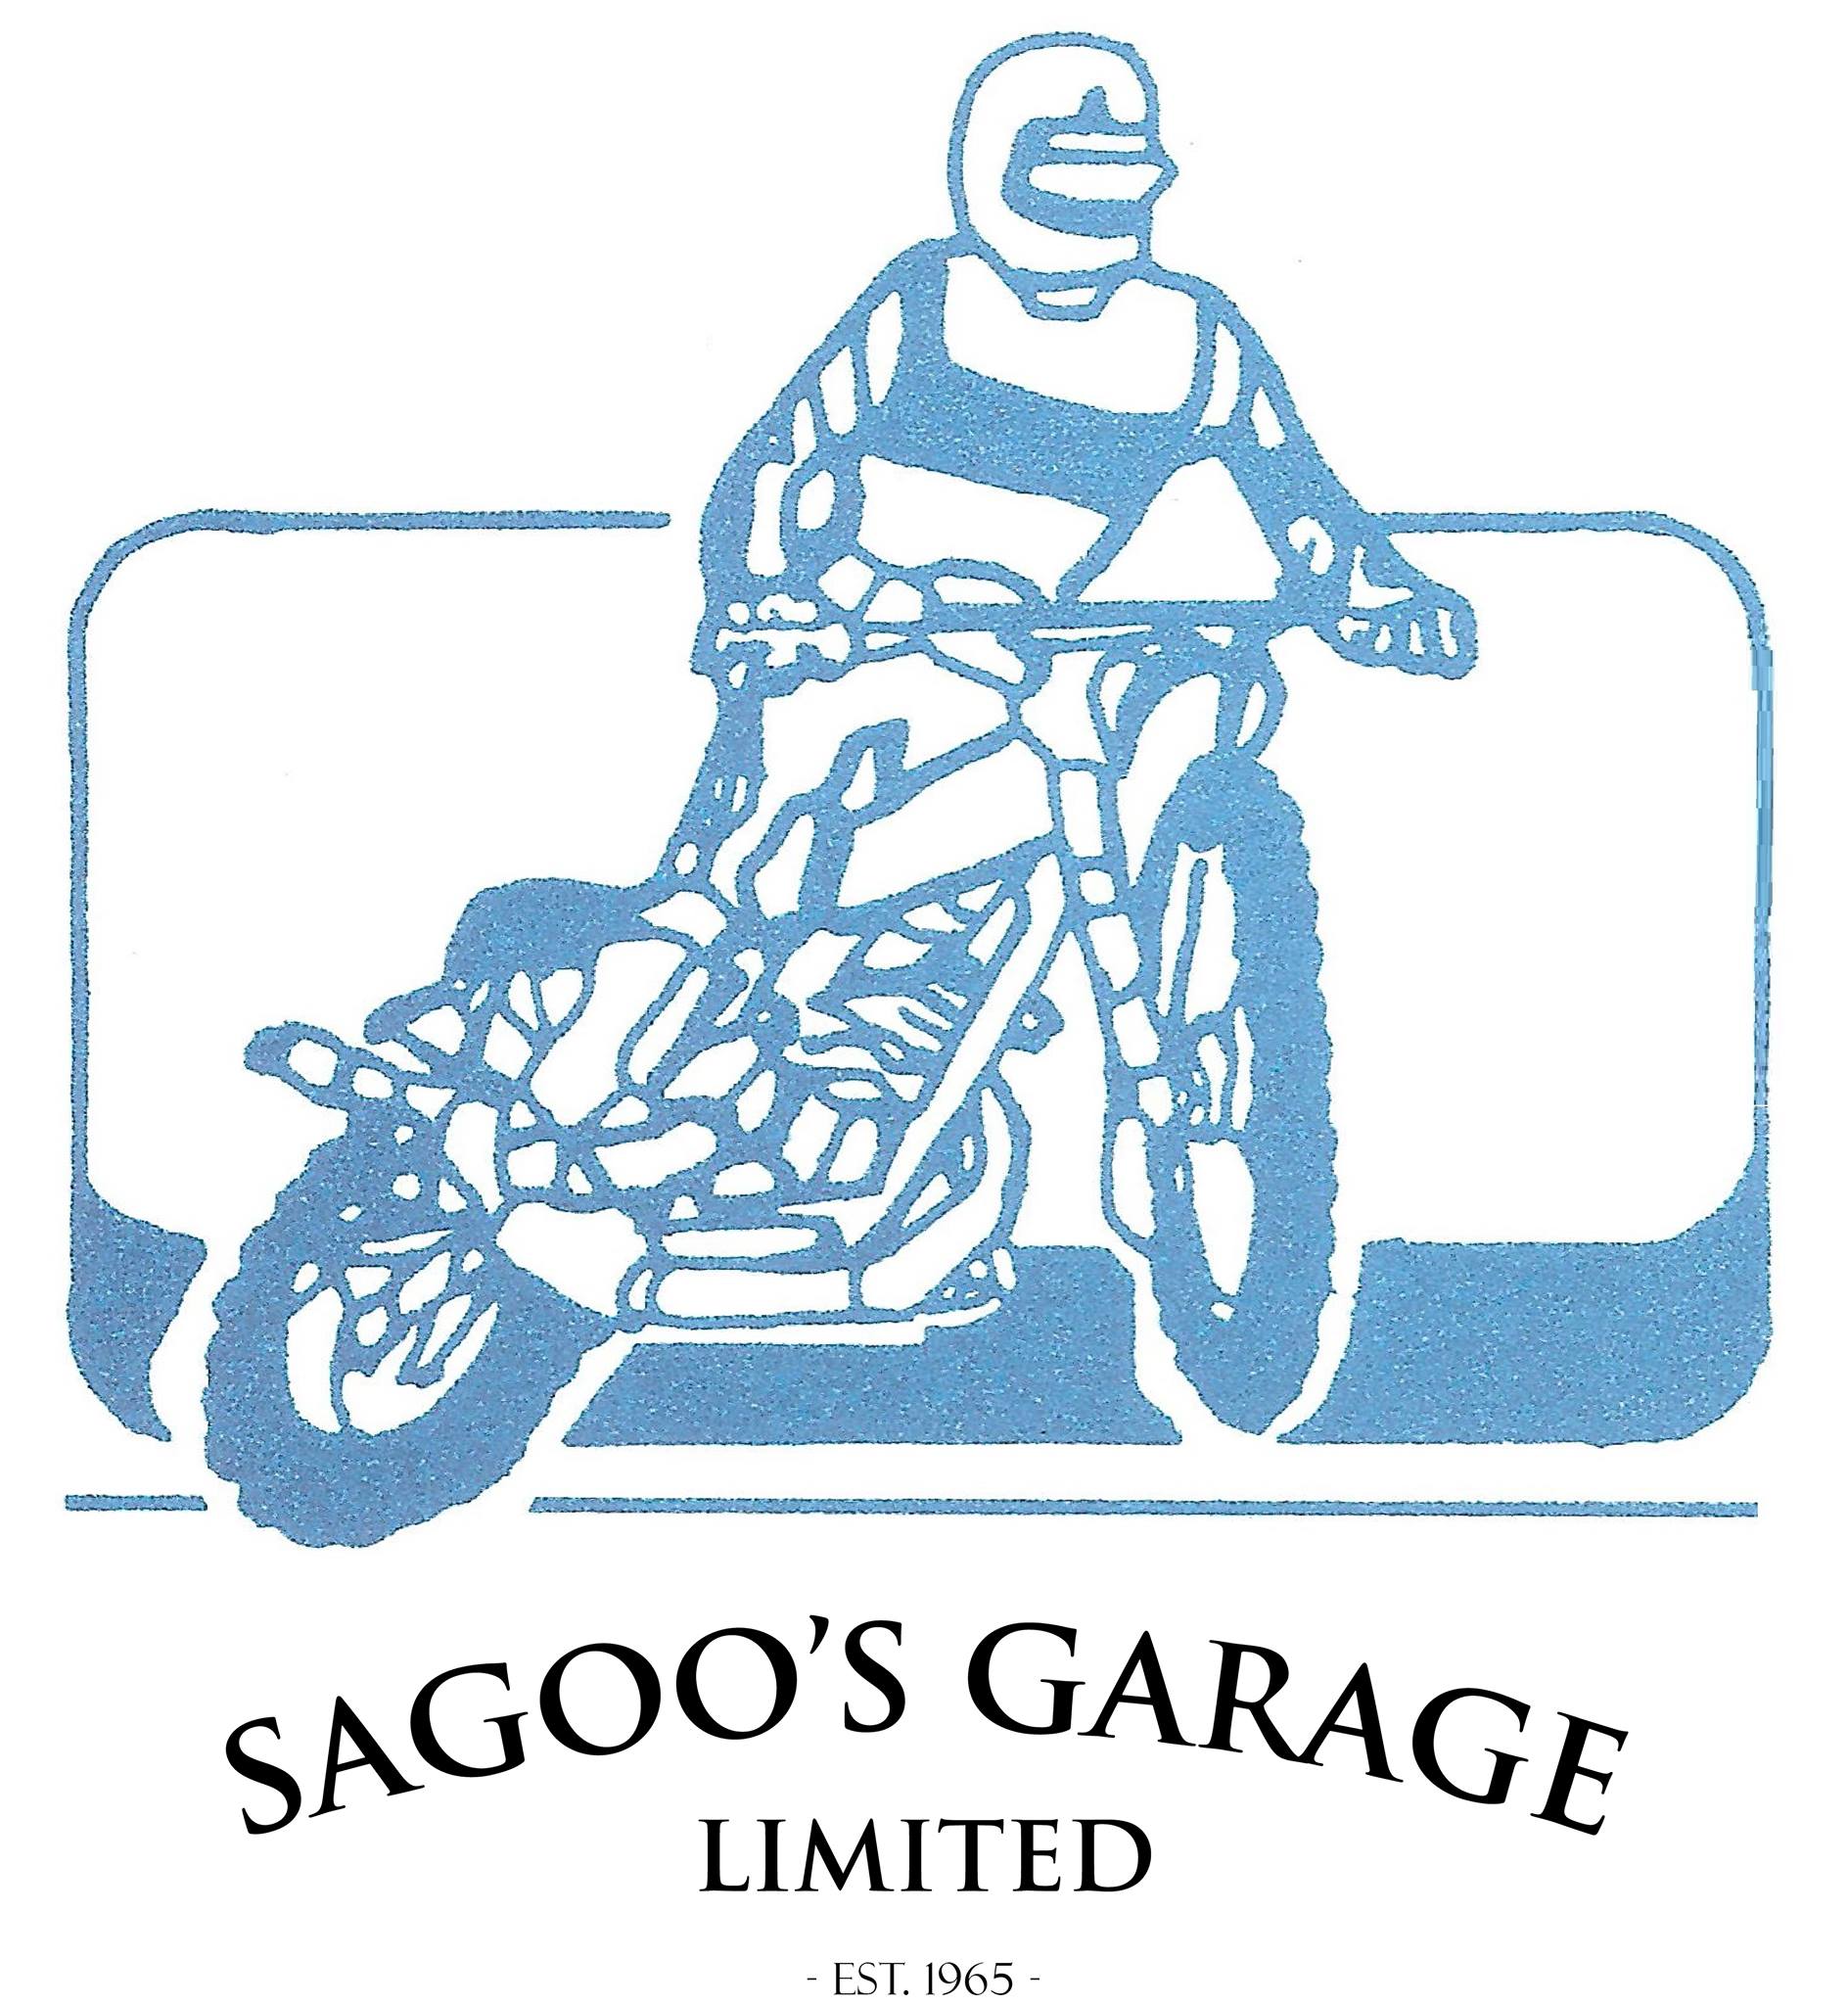 Sagoo’s Garage Ltd